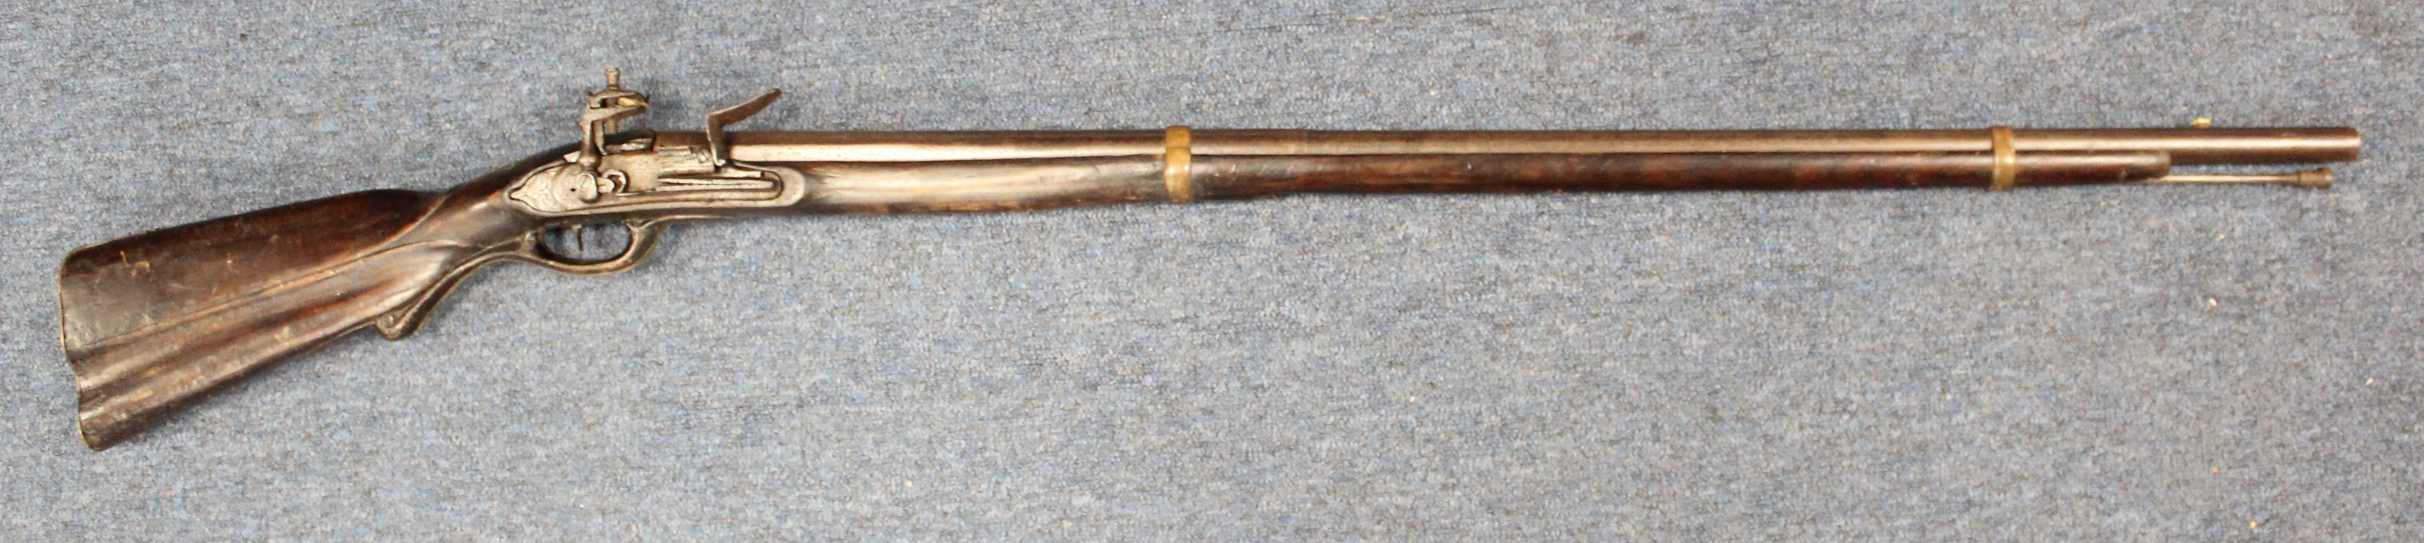 18th century flint lock musket with caved stock, brass furniture unusual gun.